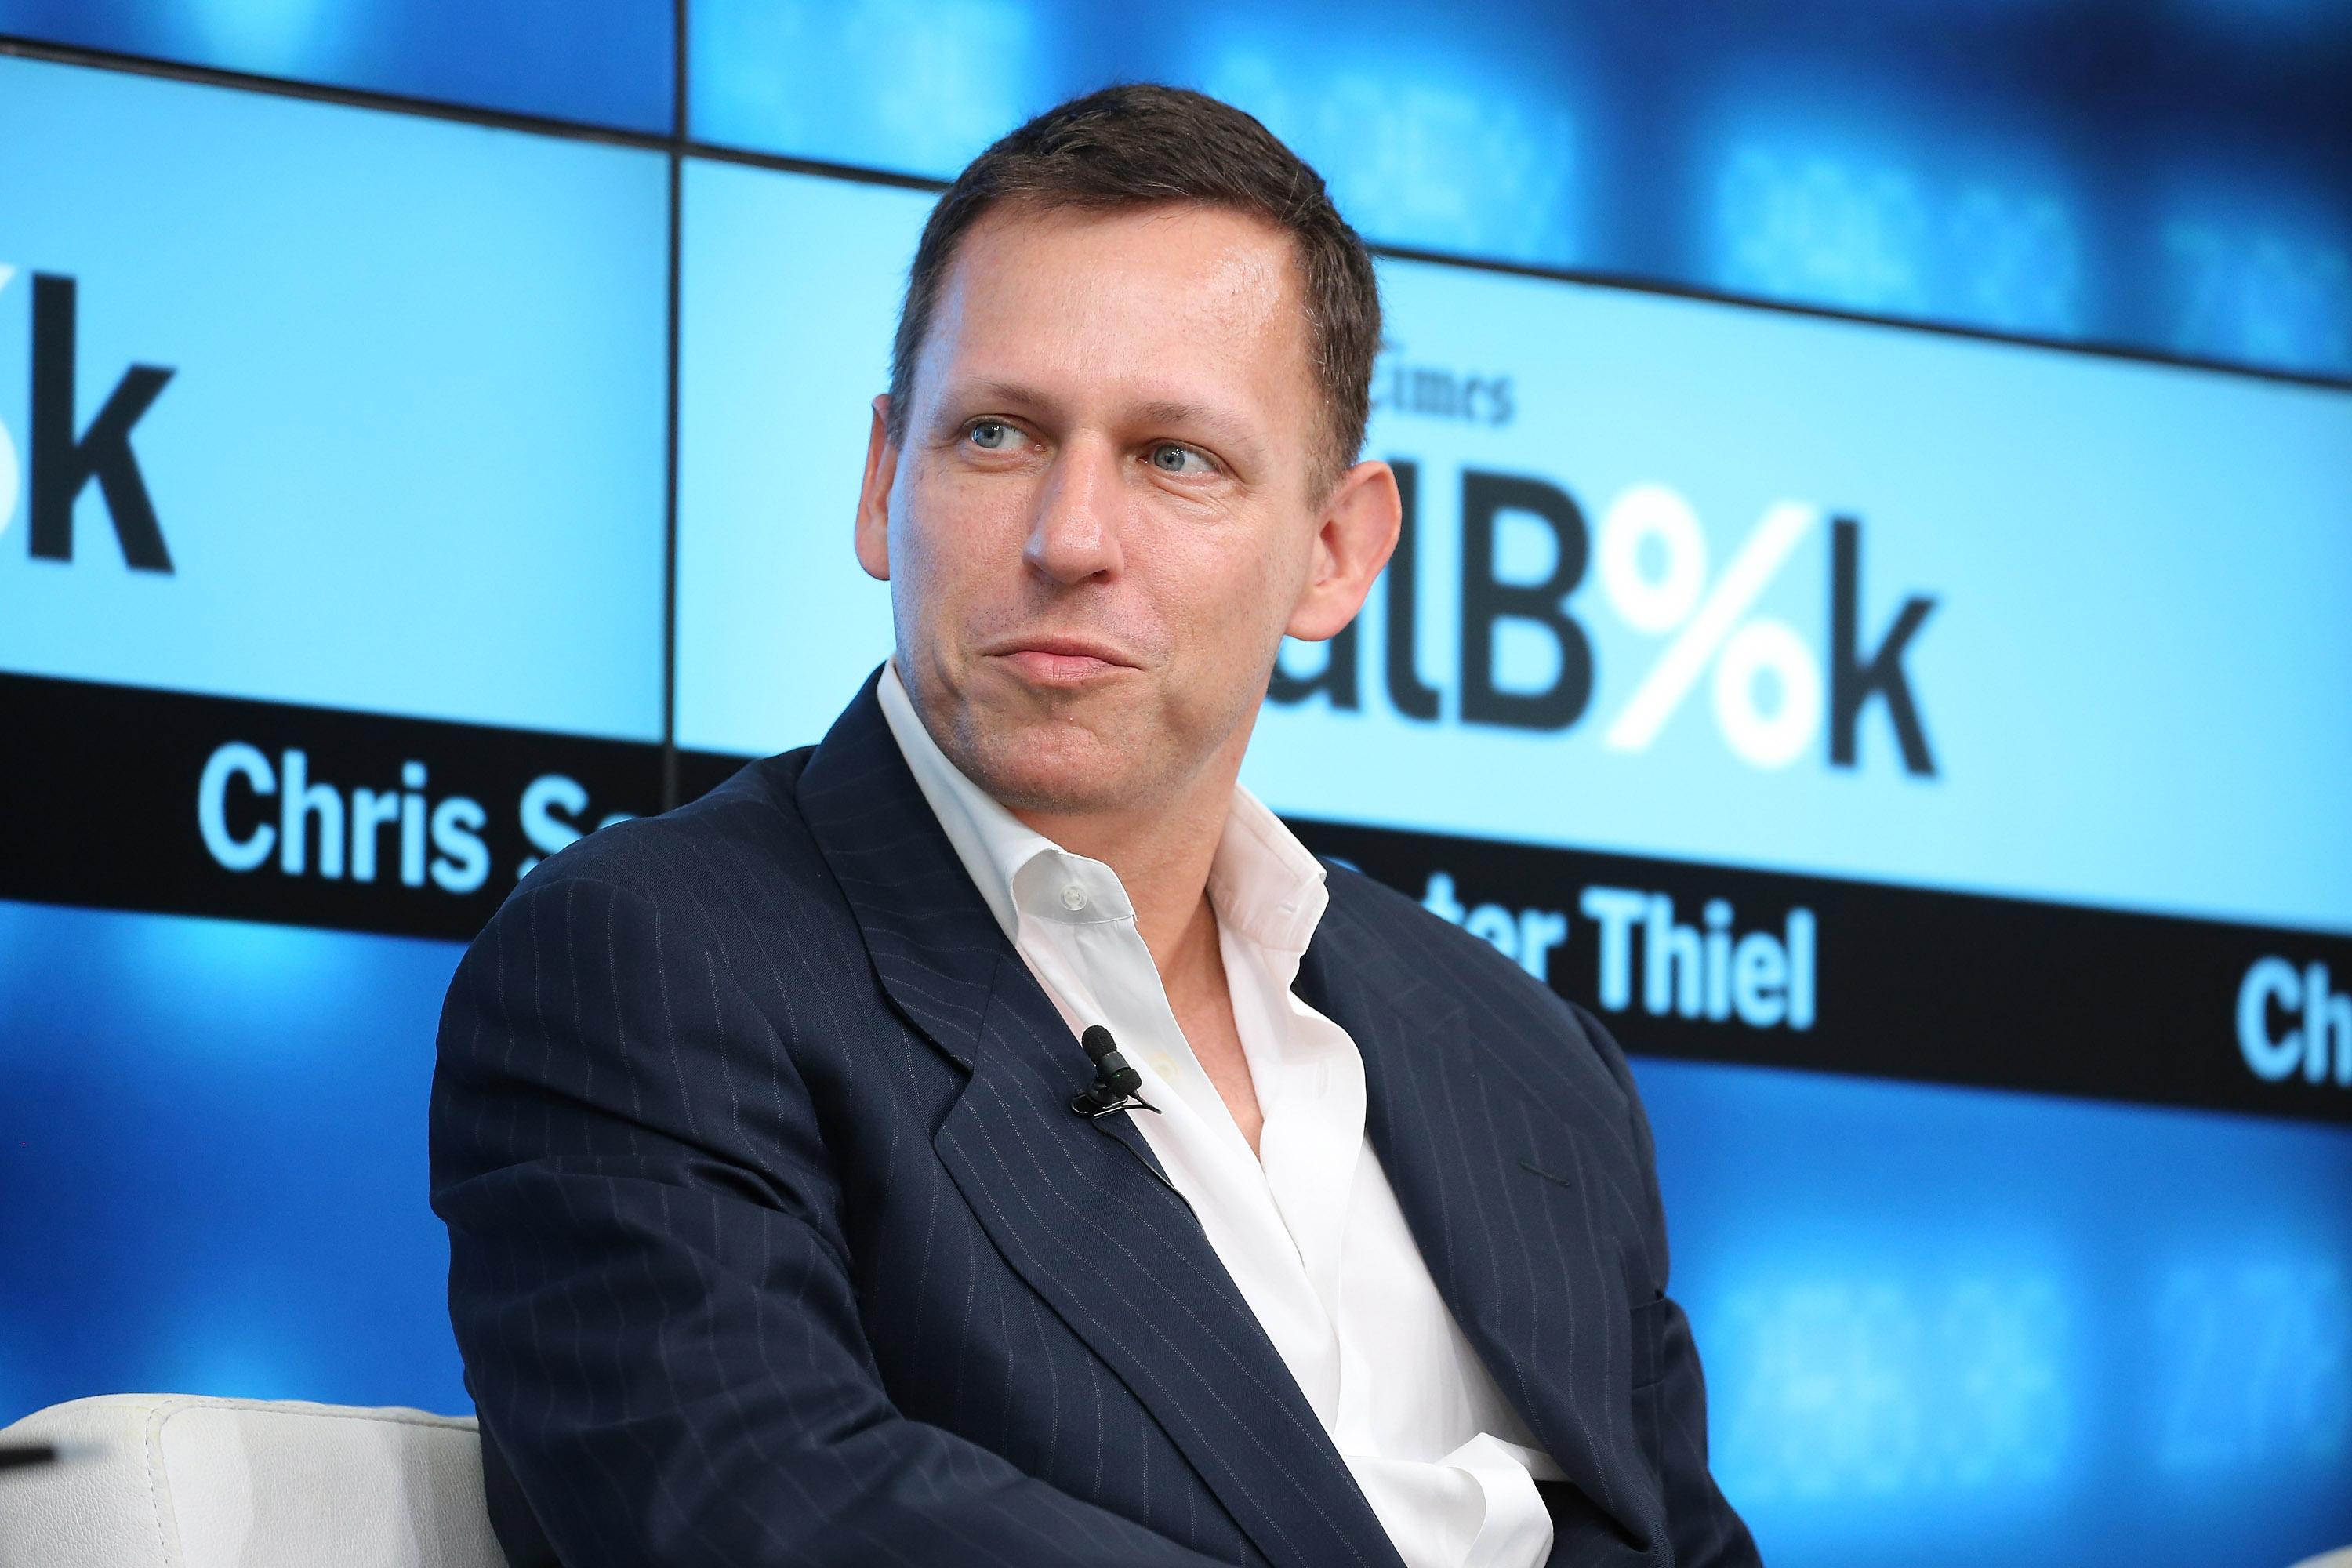 Peter Thiel, backer of Bullish crypto exchange